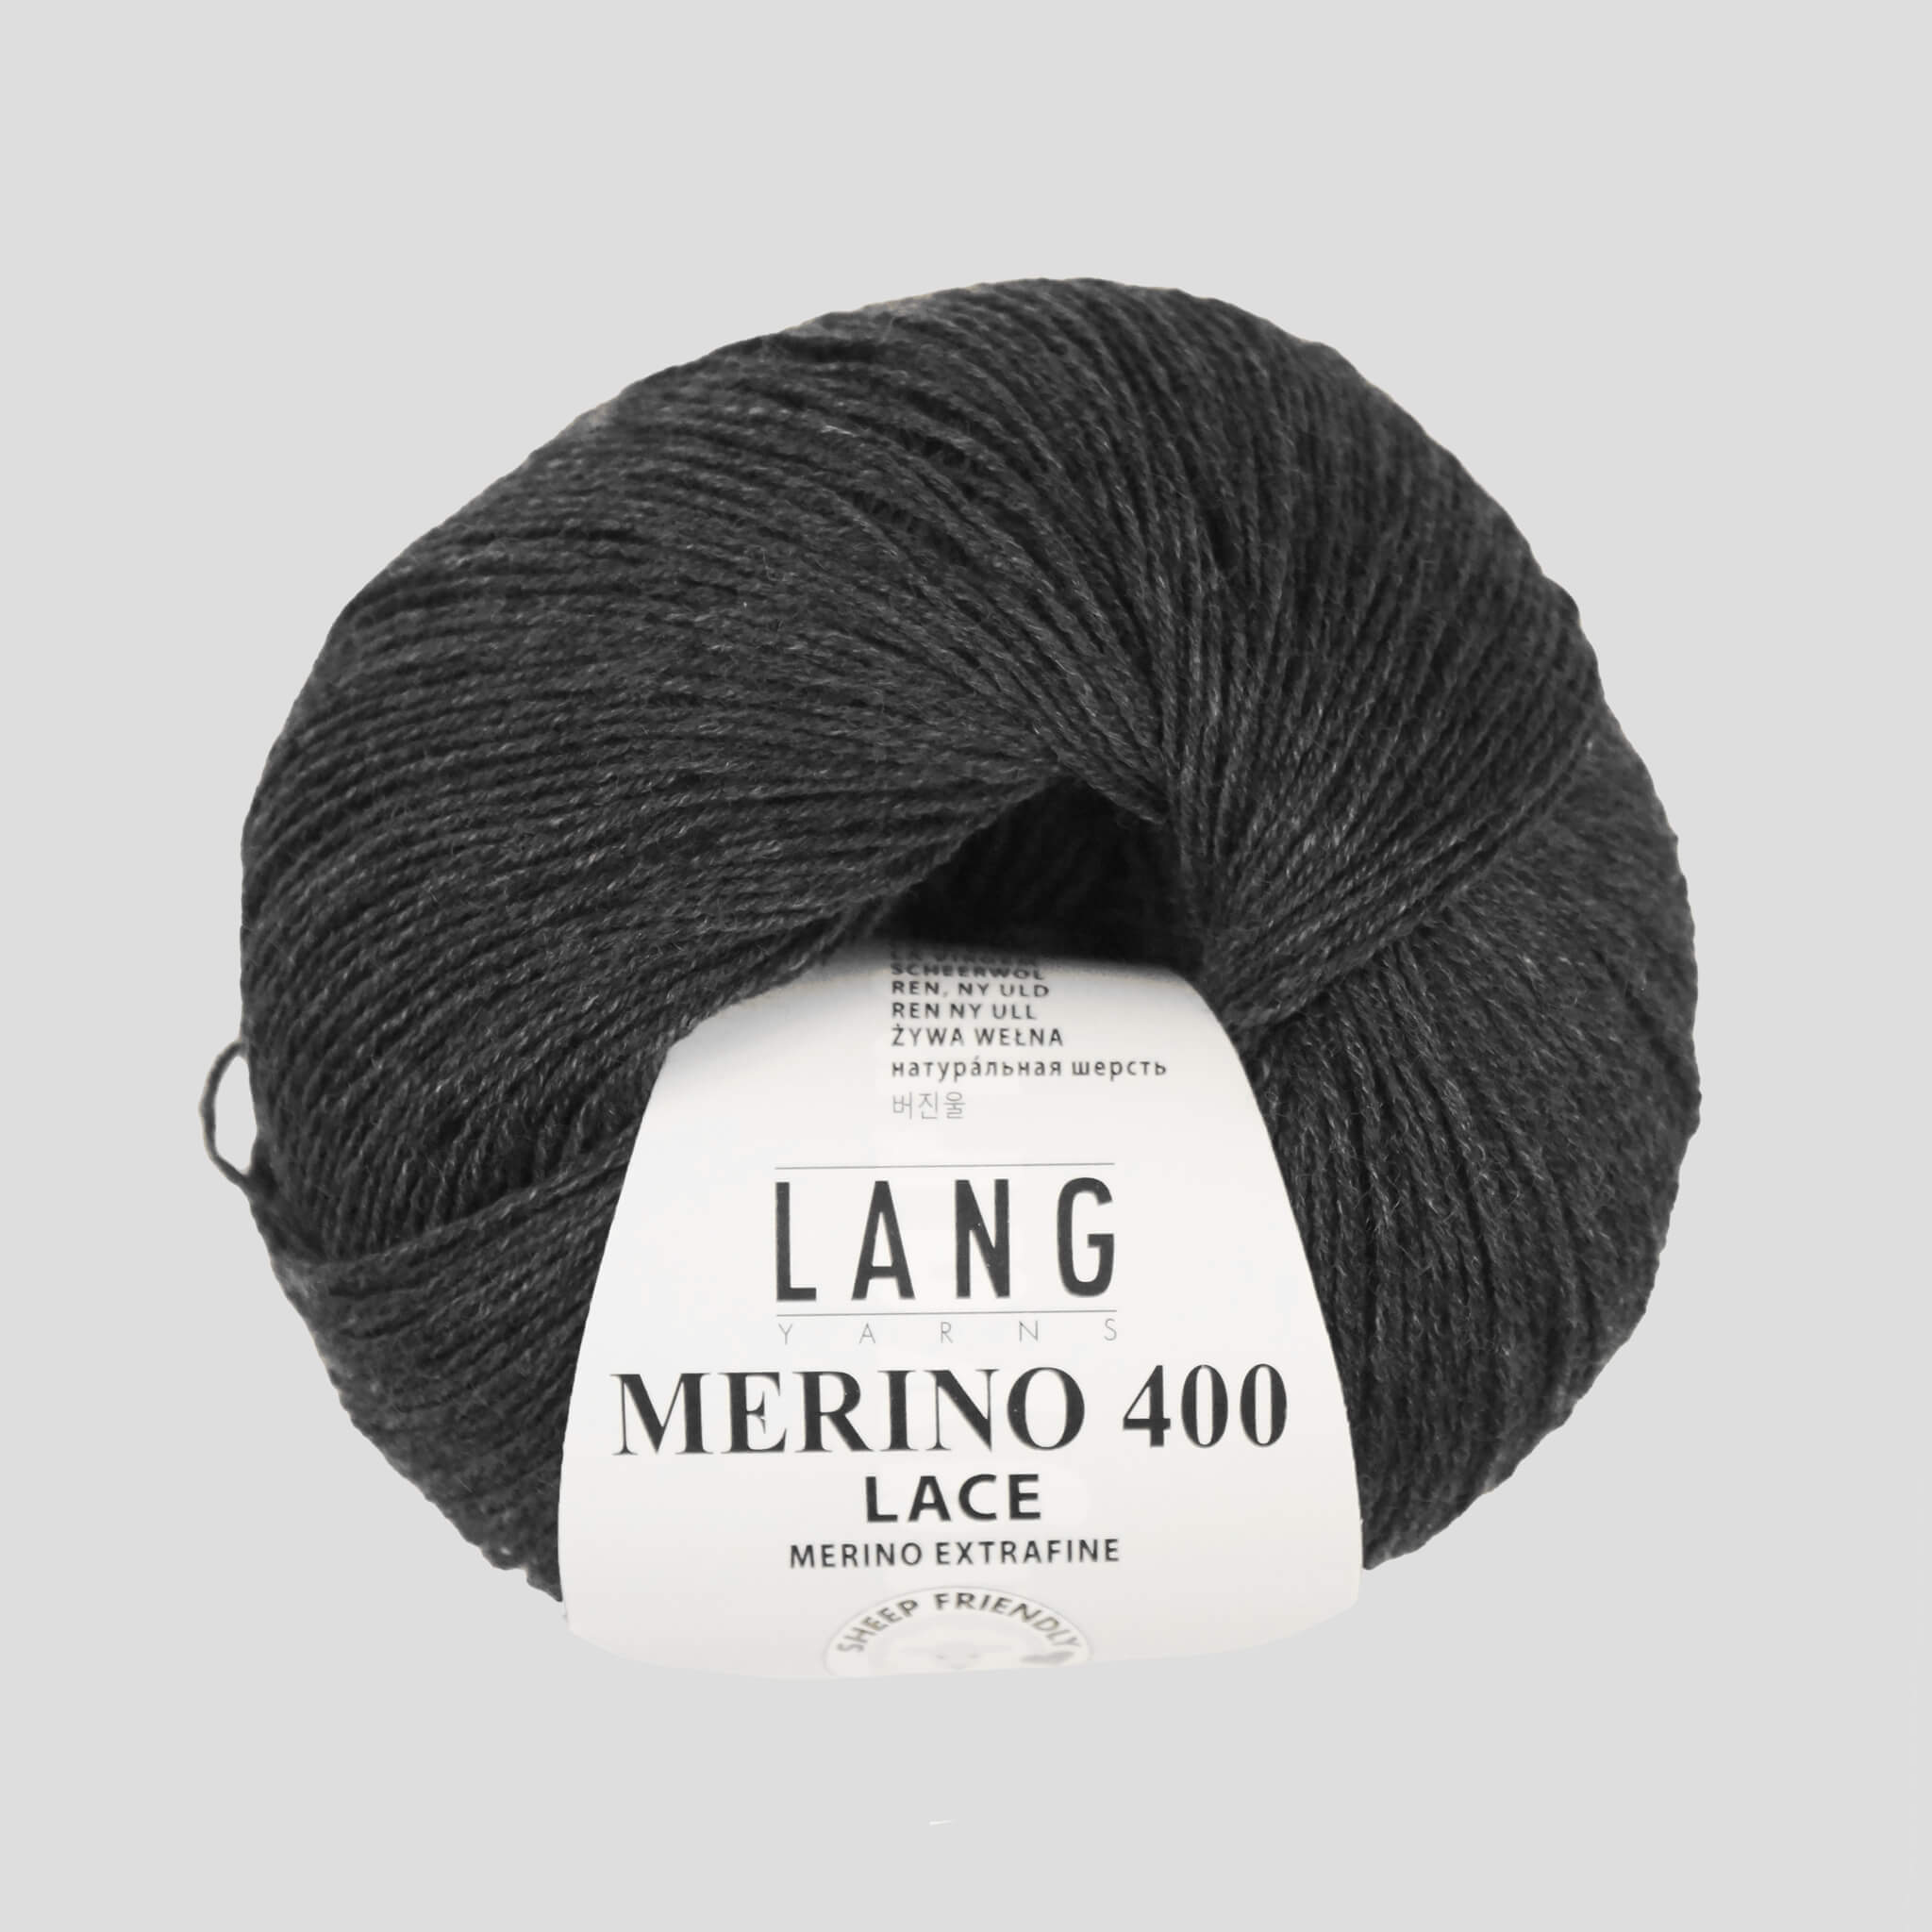 Lang Yarn I Merino 400 farve 0070 - Køb Merinould garn fra Lang Yarn